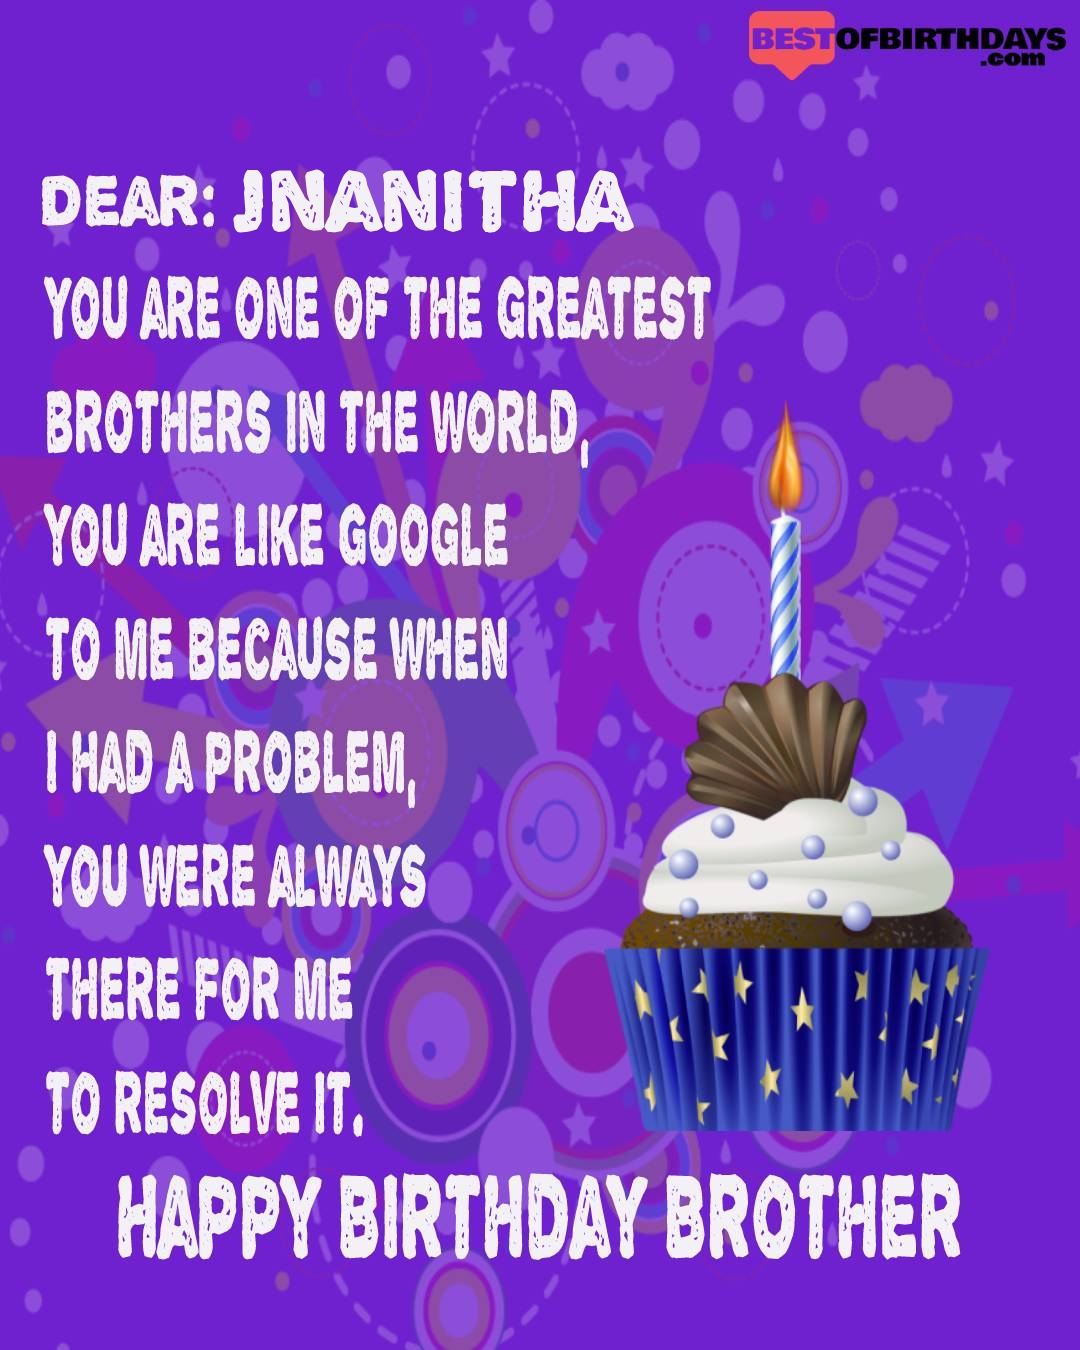 Happy birthday jnanitha bhai brother bro